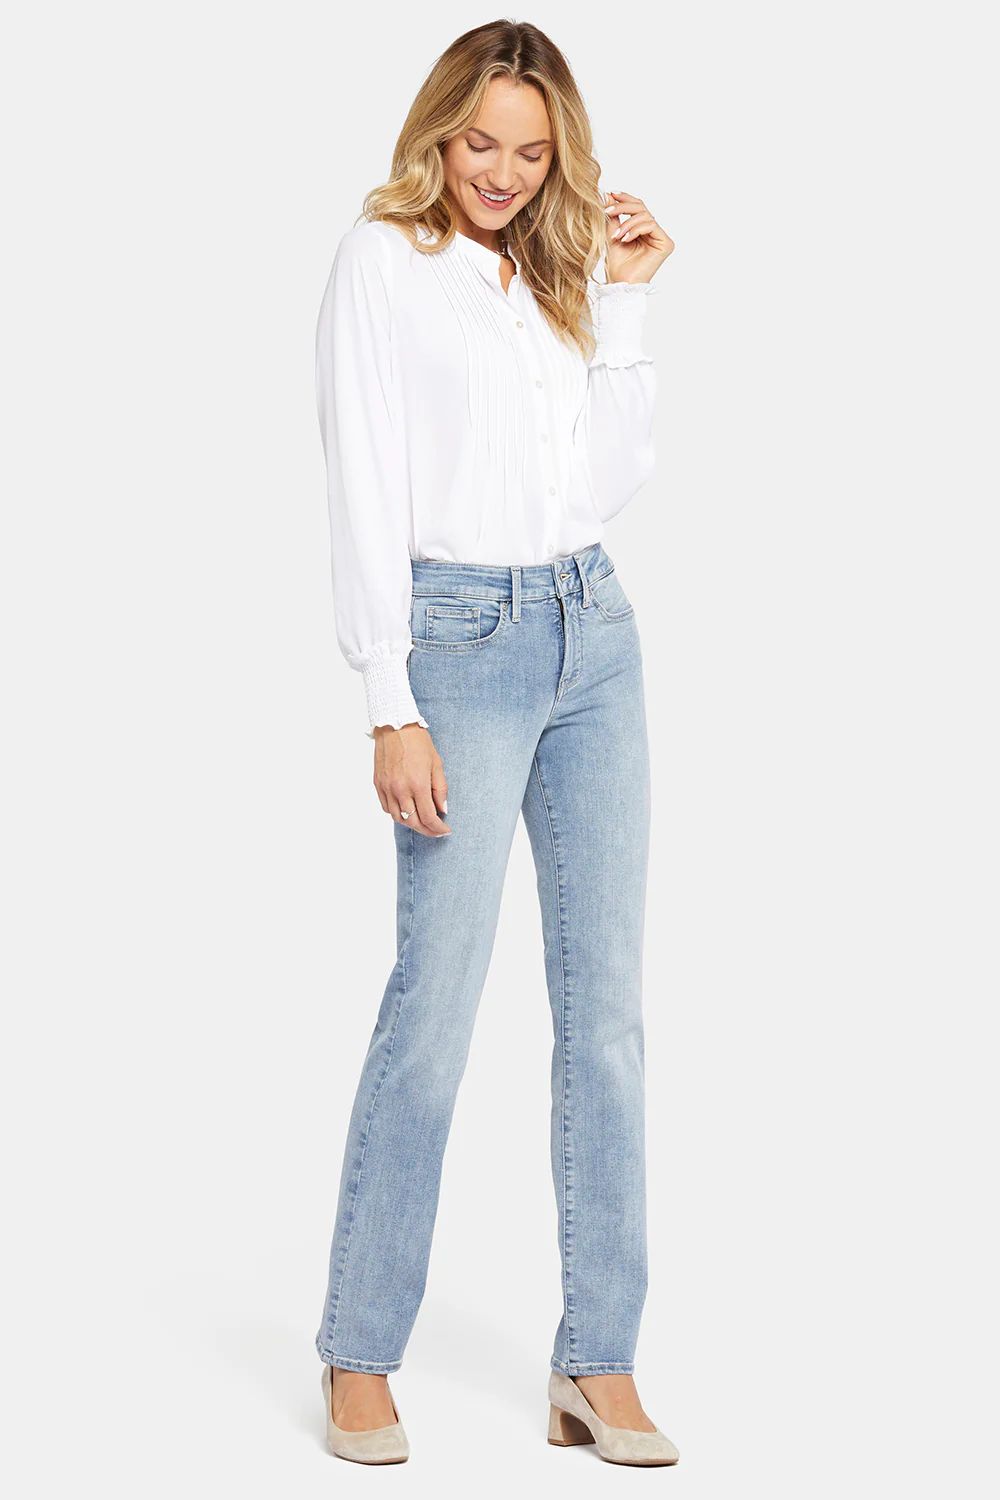 Marilyn Straight Jeans in Petite - Haley | NYDJ